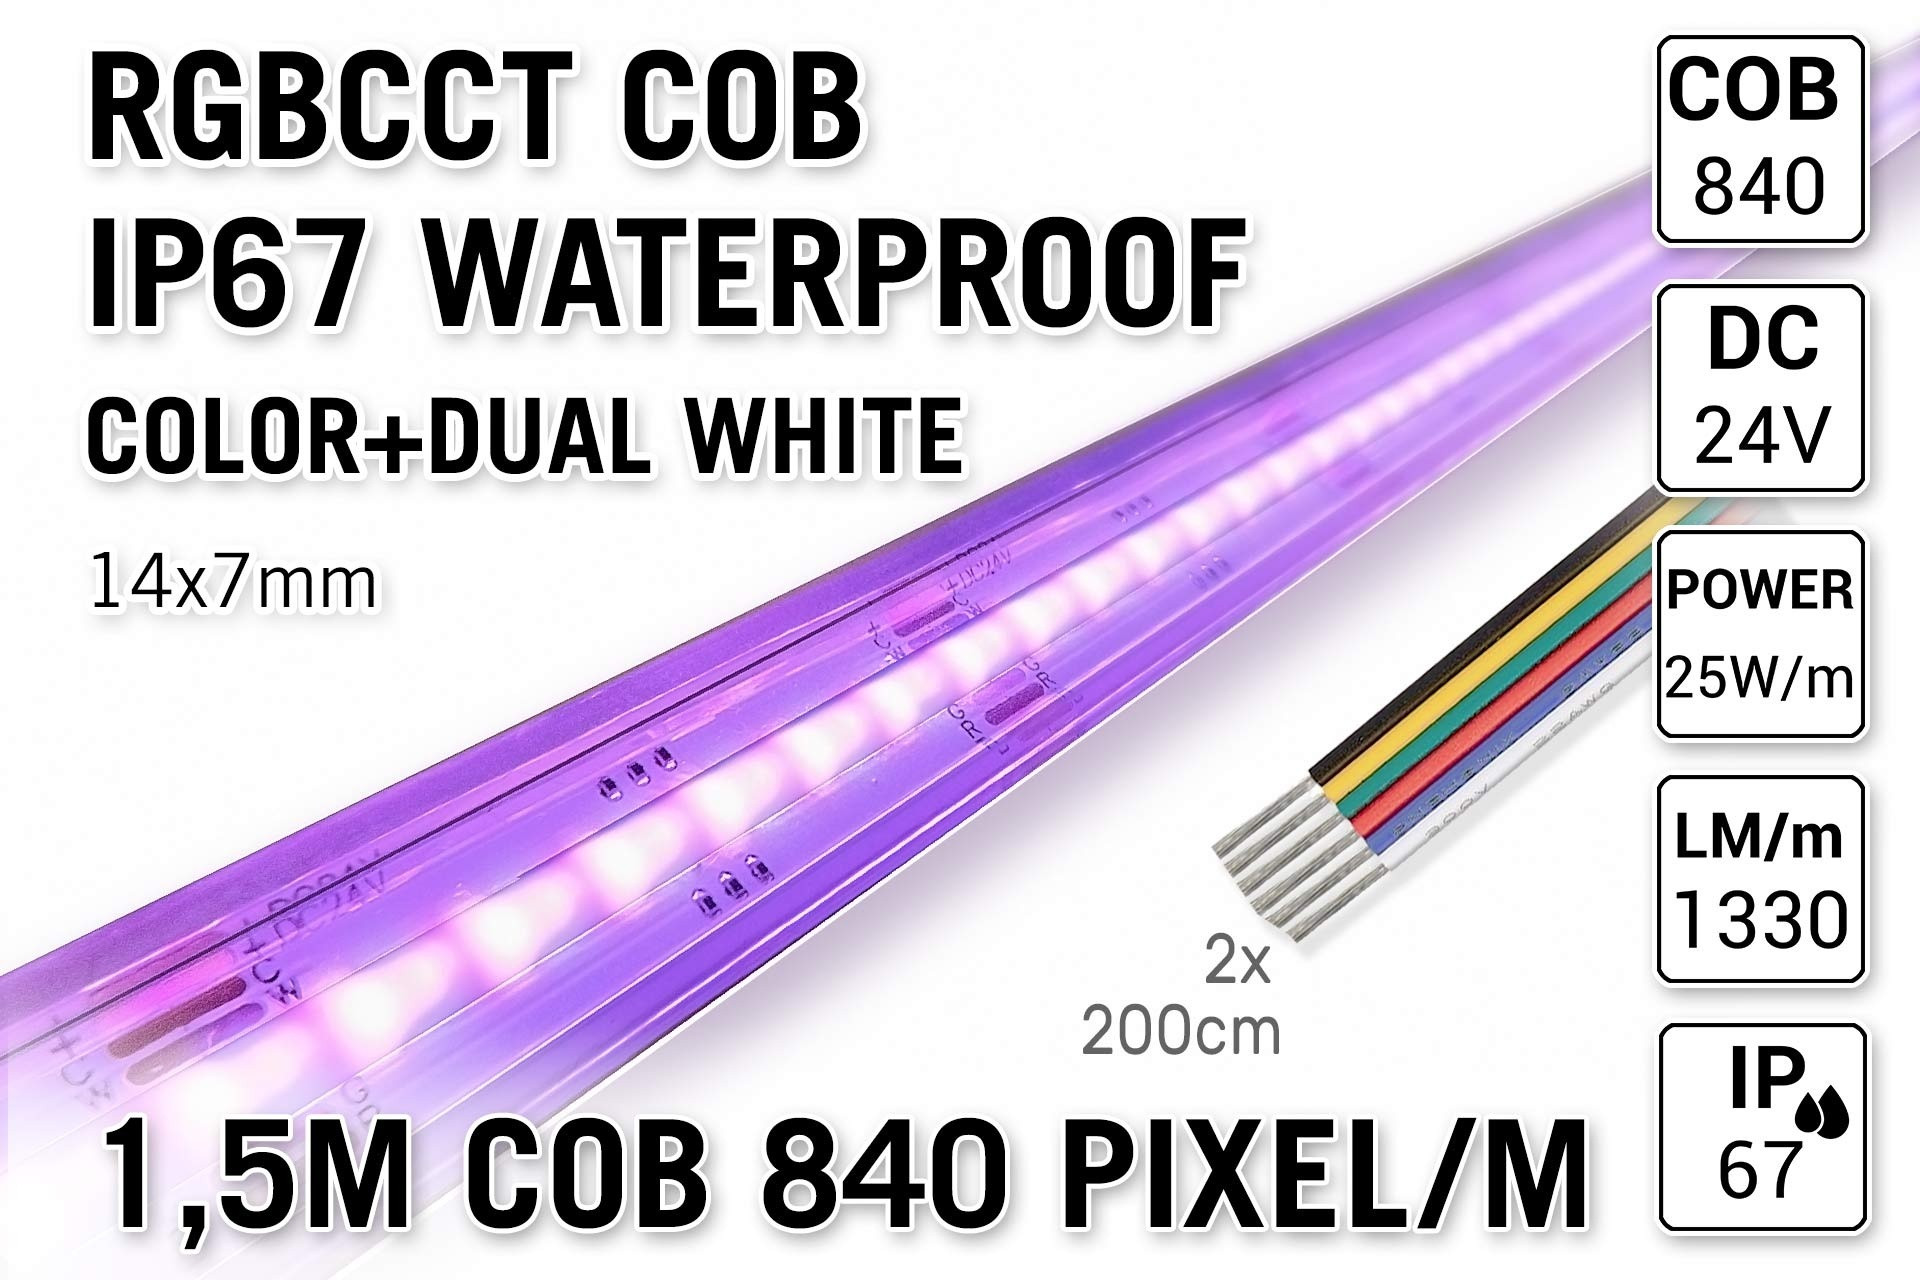 1,5m COB RGBCCT IP67 Waterproof Led Strip | 25W pm 24V | 840 pixels pm - Losse Strip